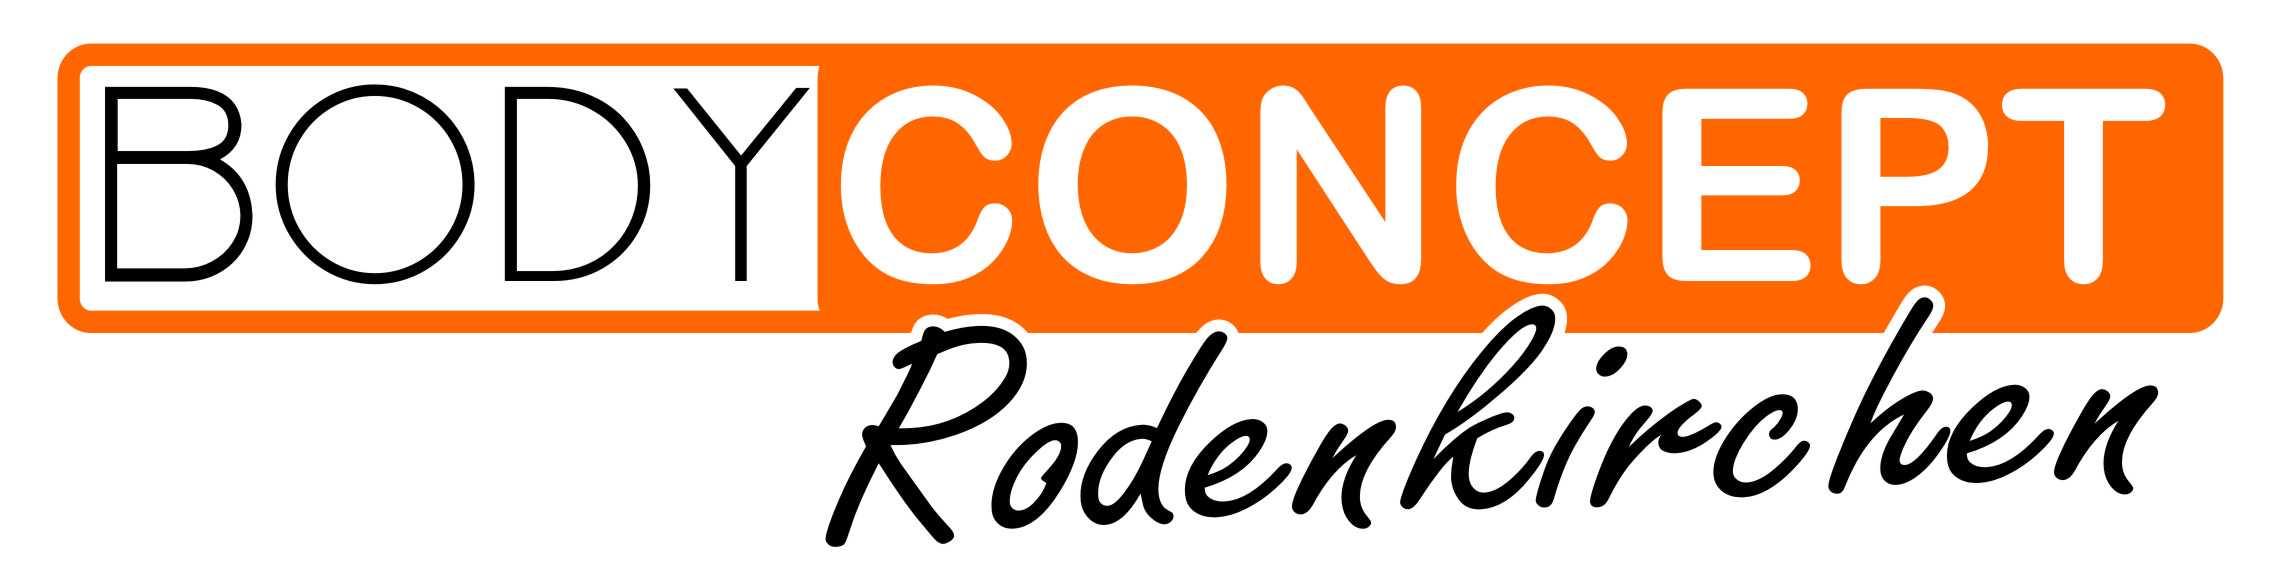  Bodyconcept Rodenkirchen Logo